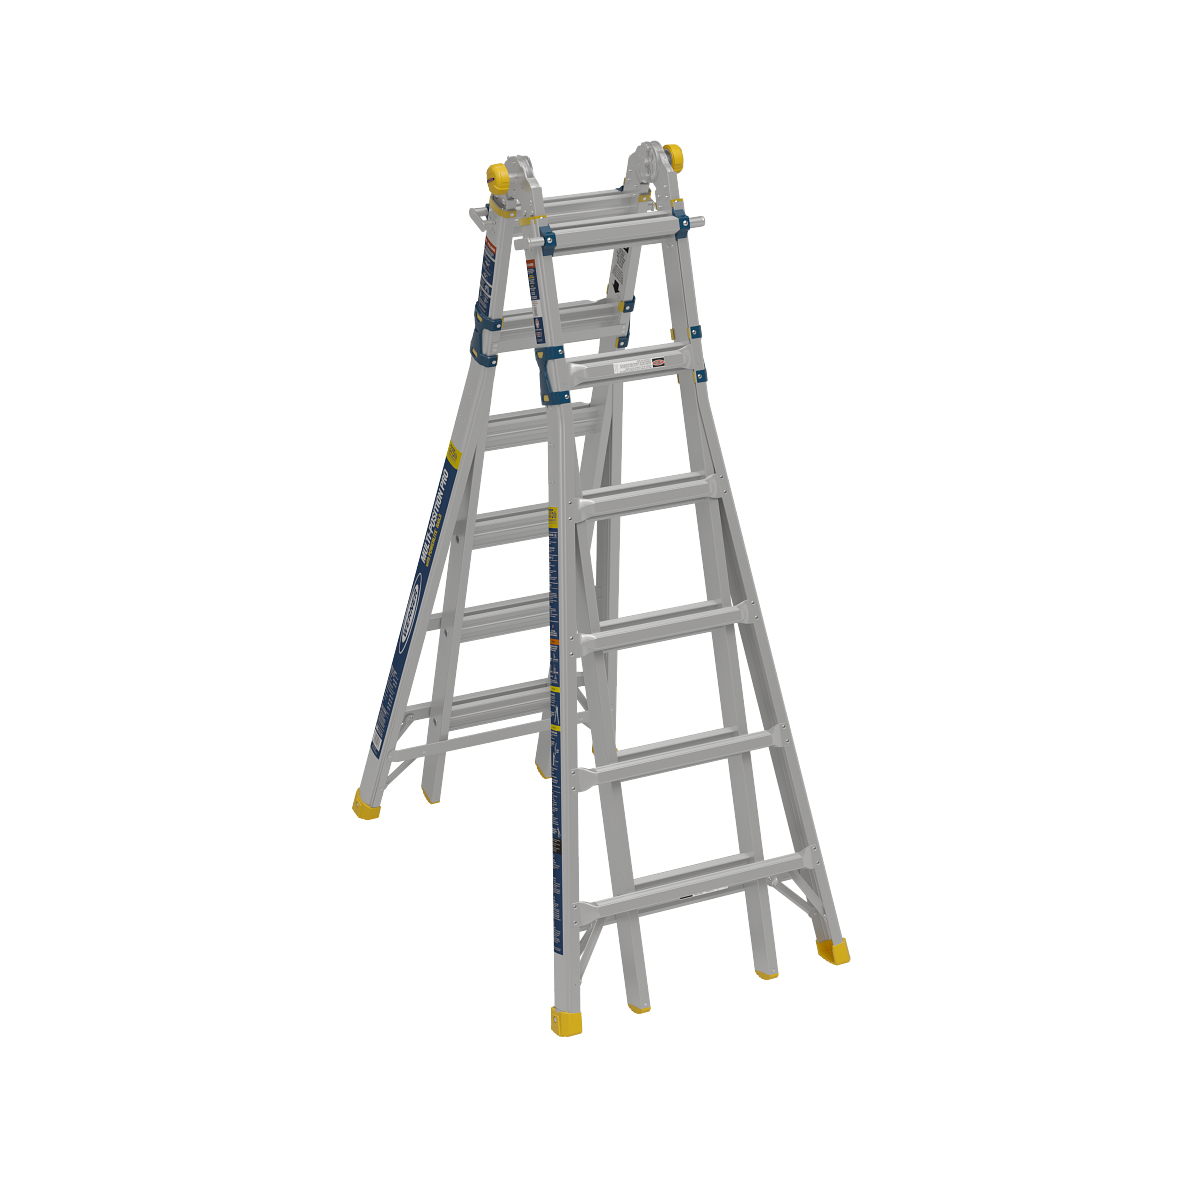 Super high ladder, I think you will appreciate it. : r/OSHA